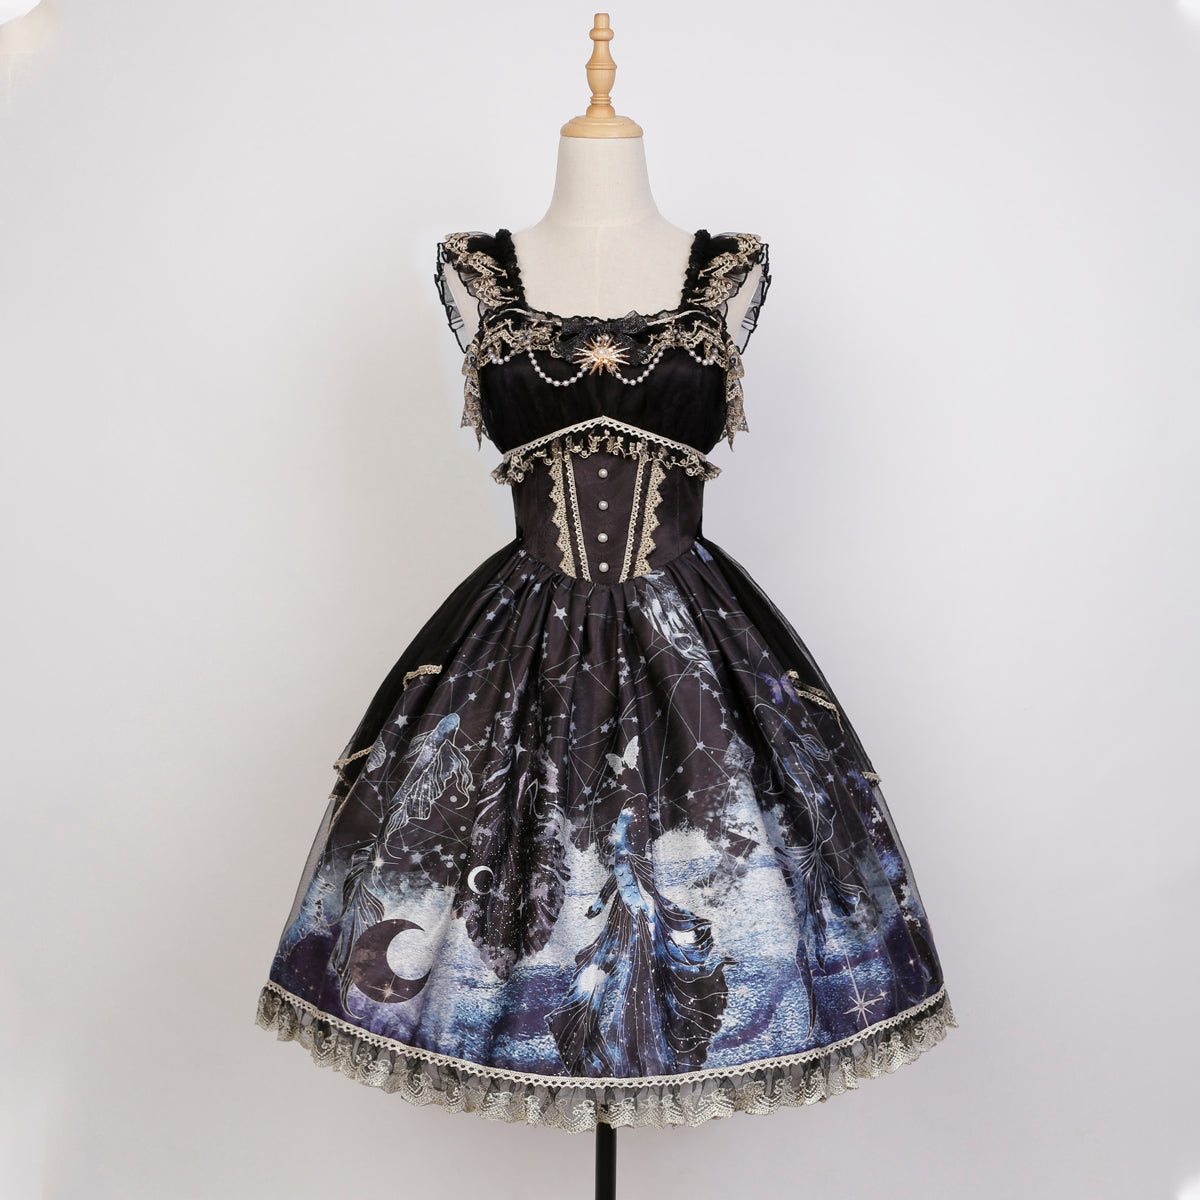 Your Princess~Witches' Night~Gothic Lolita Jumper Dress S jsk dress 